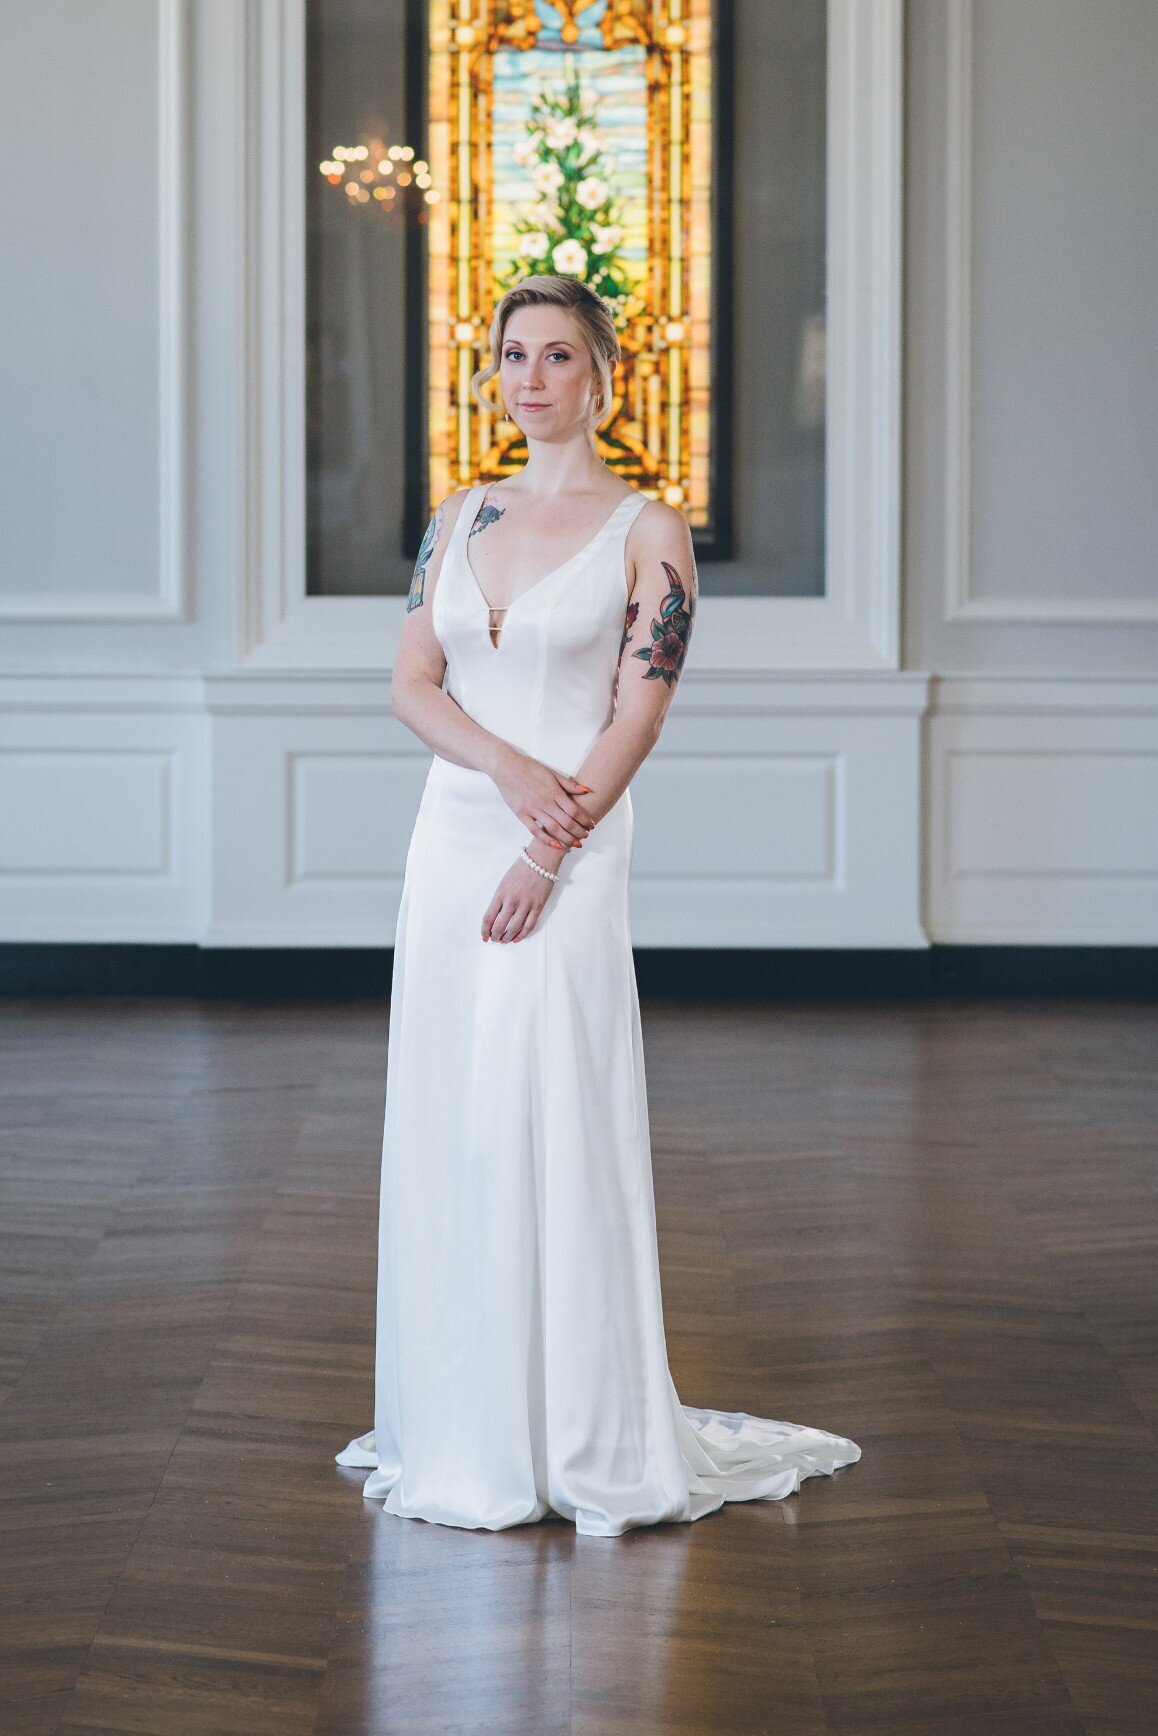 The Iset wedding dress is a v-neck charmeuse wedding dress by indie bridal designer Edith Elan.